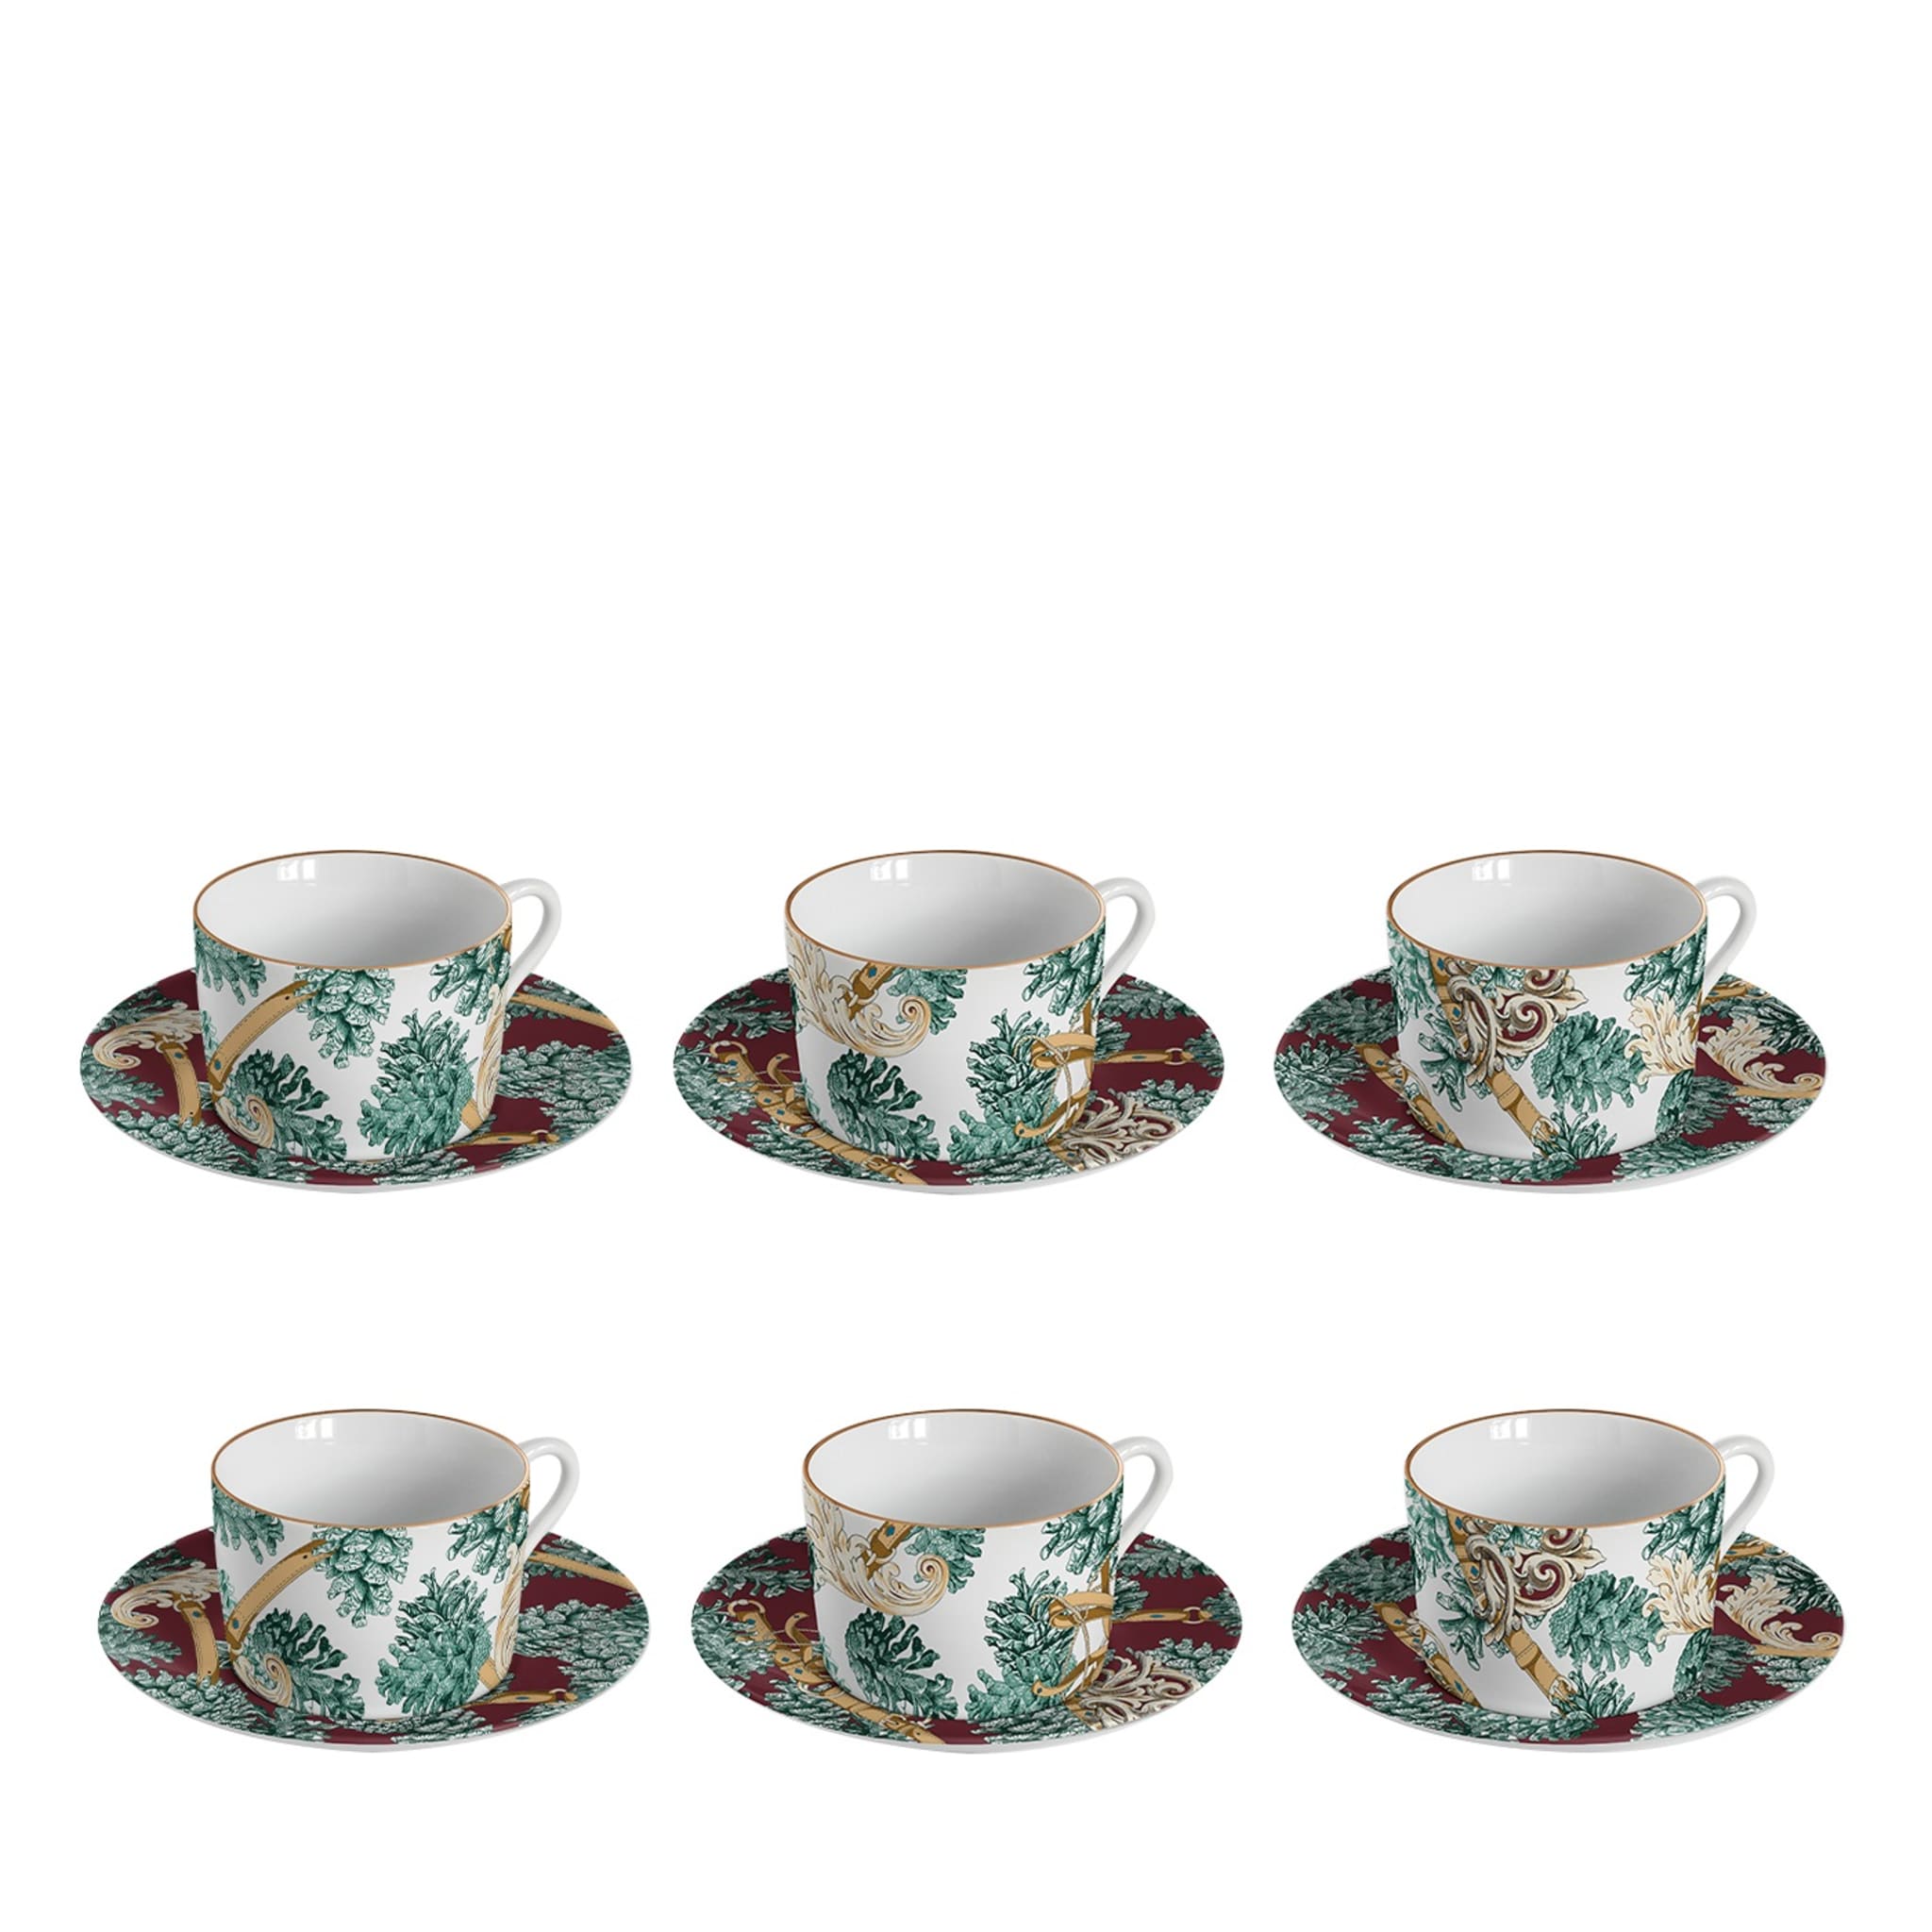 The Big White Set of 6 Tea Cups - Main view